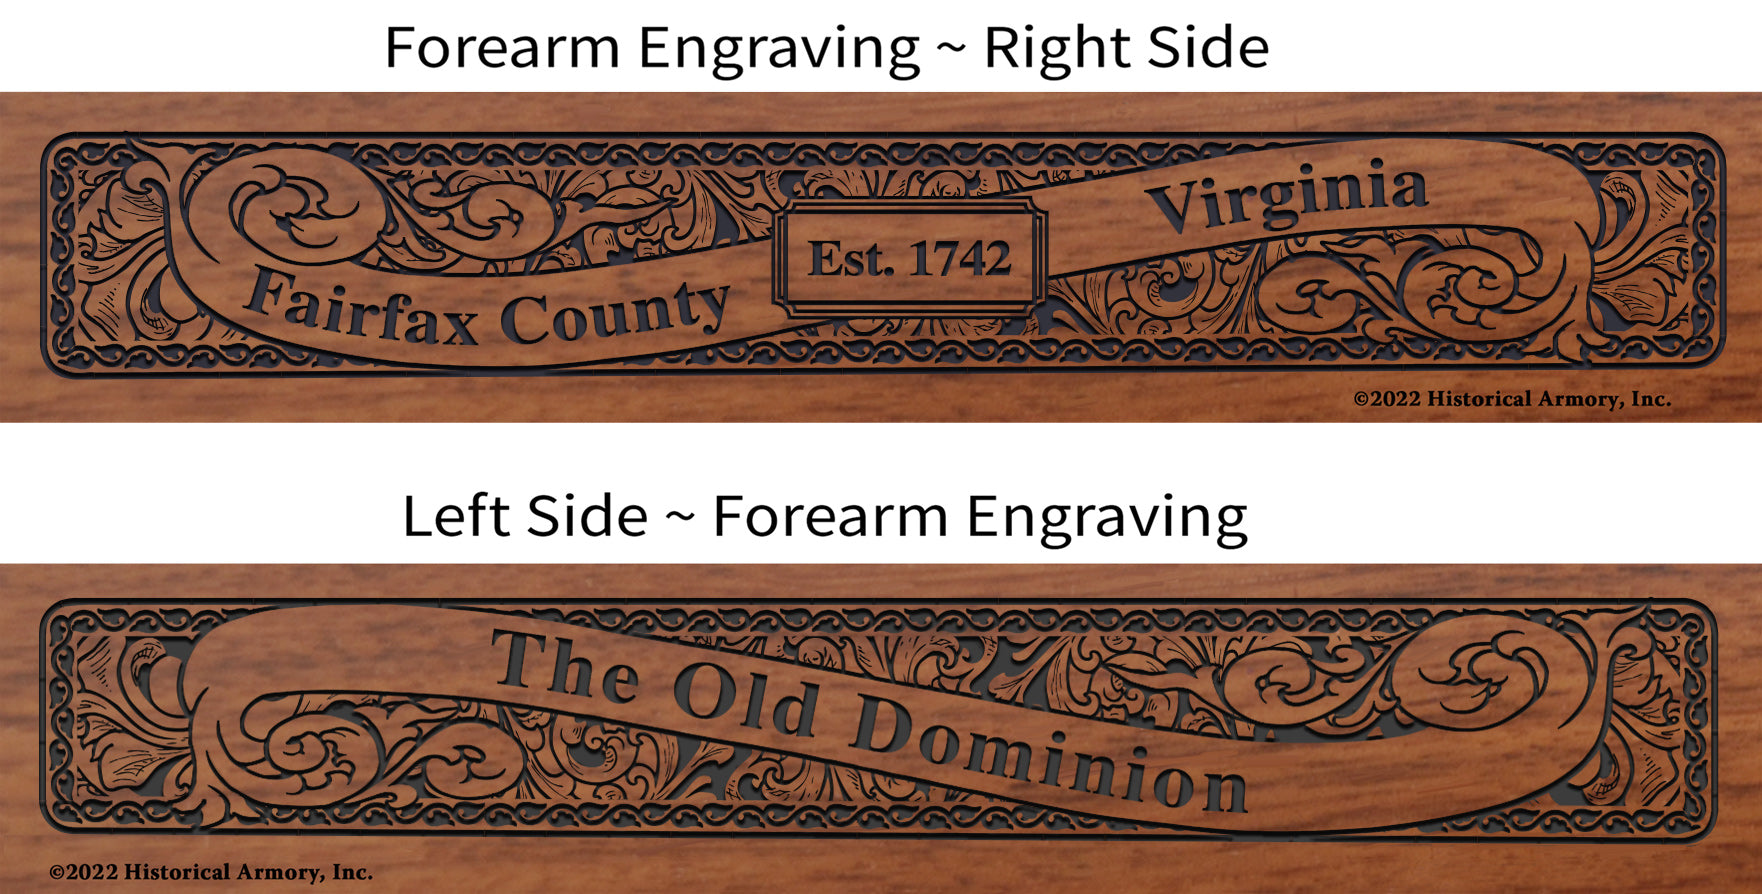 Fairfax County Virginia Engraved Rifle Forearm